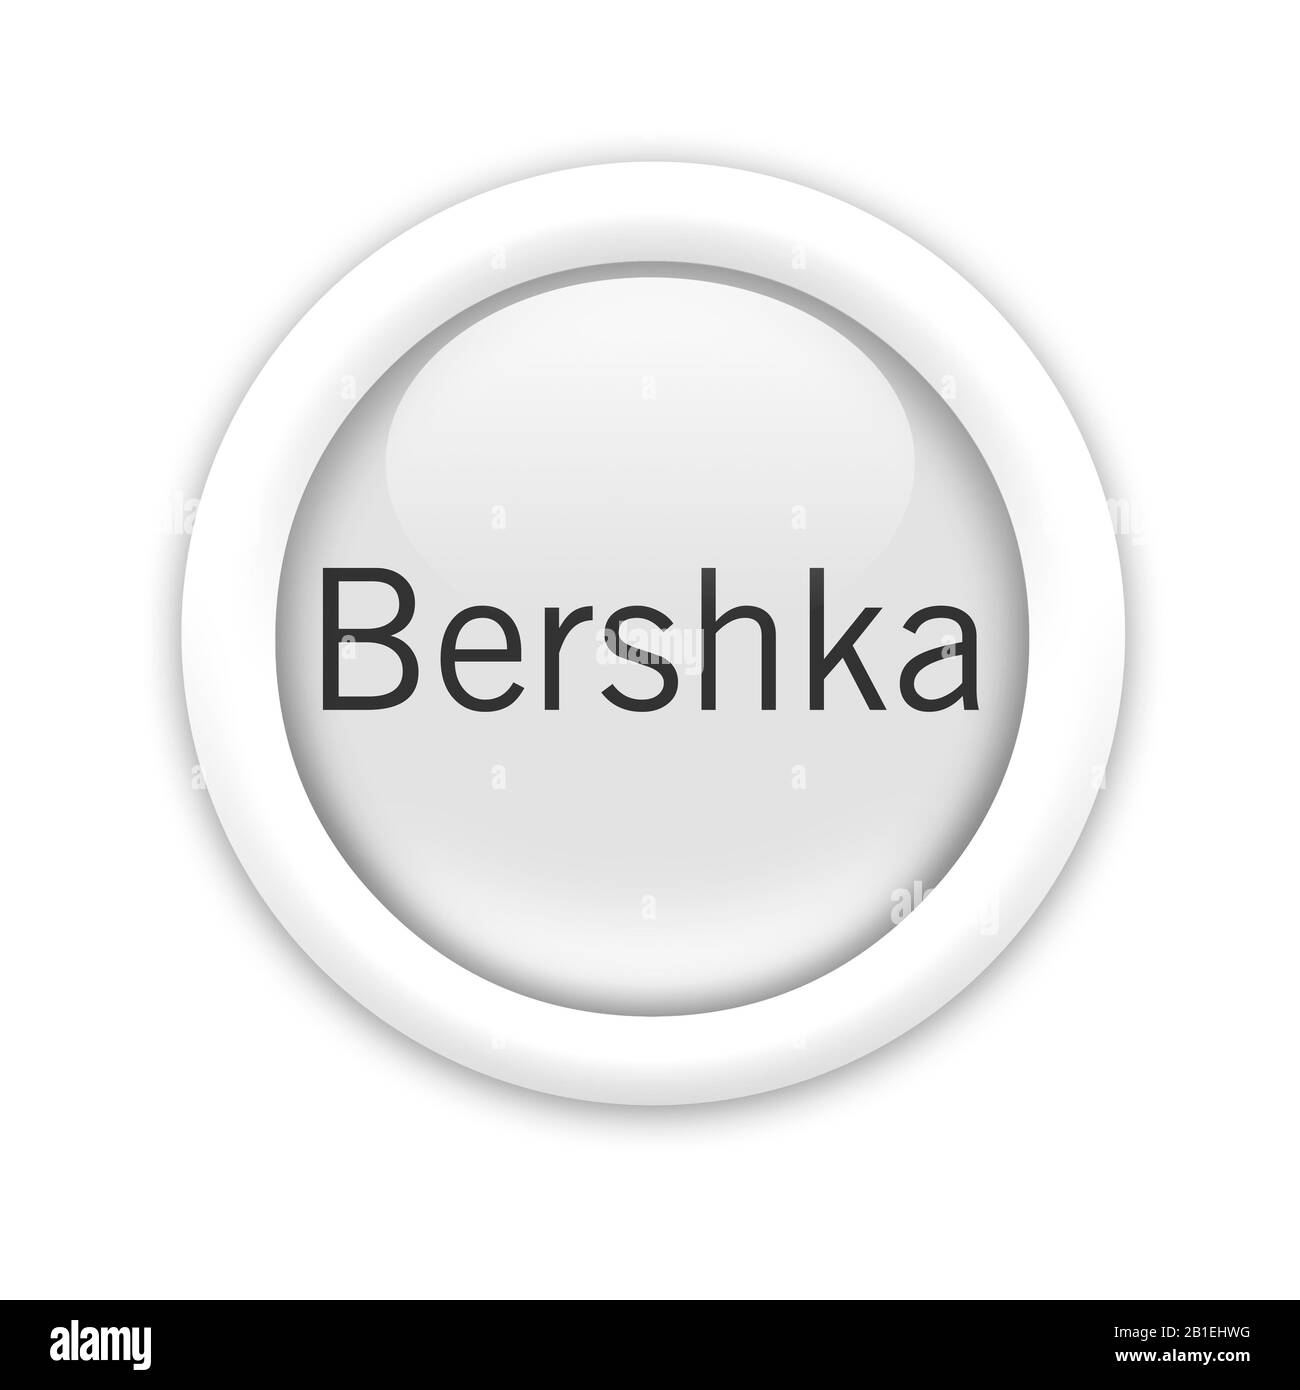 Bershka logo -Fotos und -Bildmaterial in hoher Auflösung – Alamy